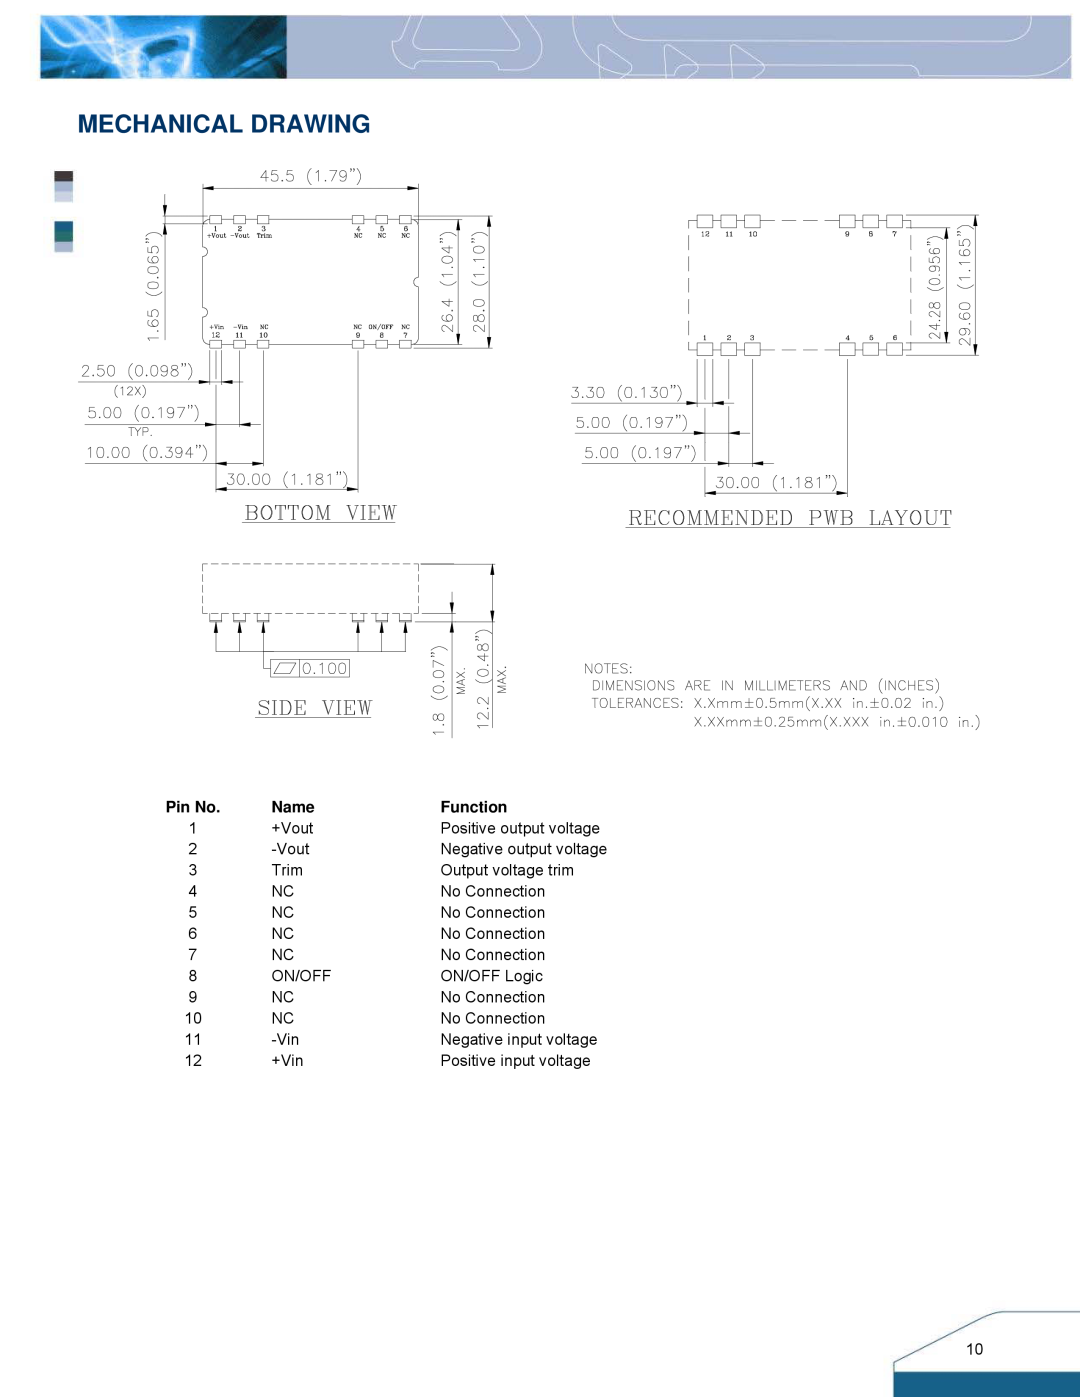 Delta Electronics S36SS manual Mechanical Drawing, Pin No, Name, Function 